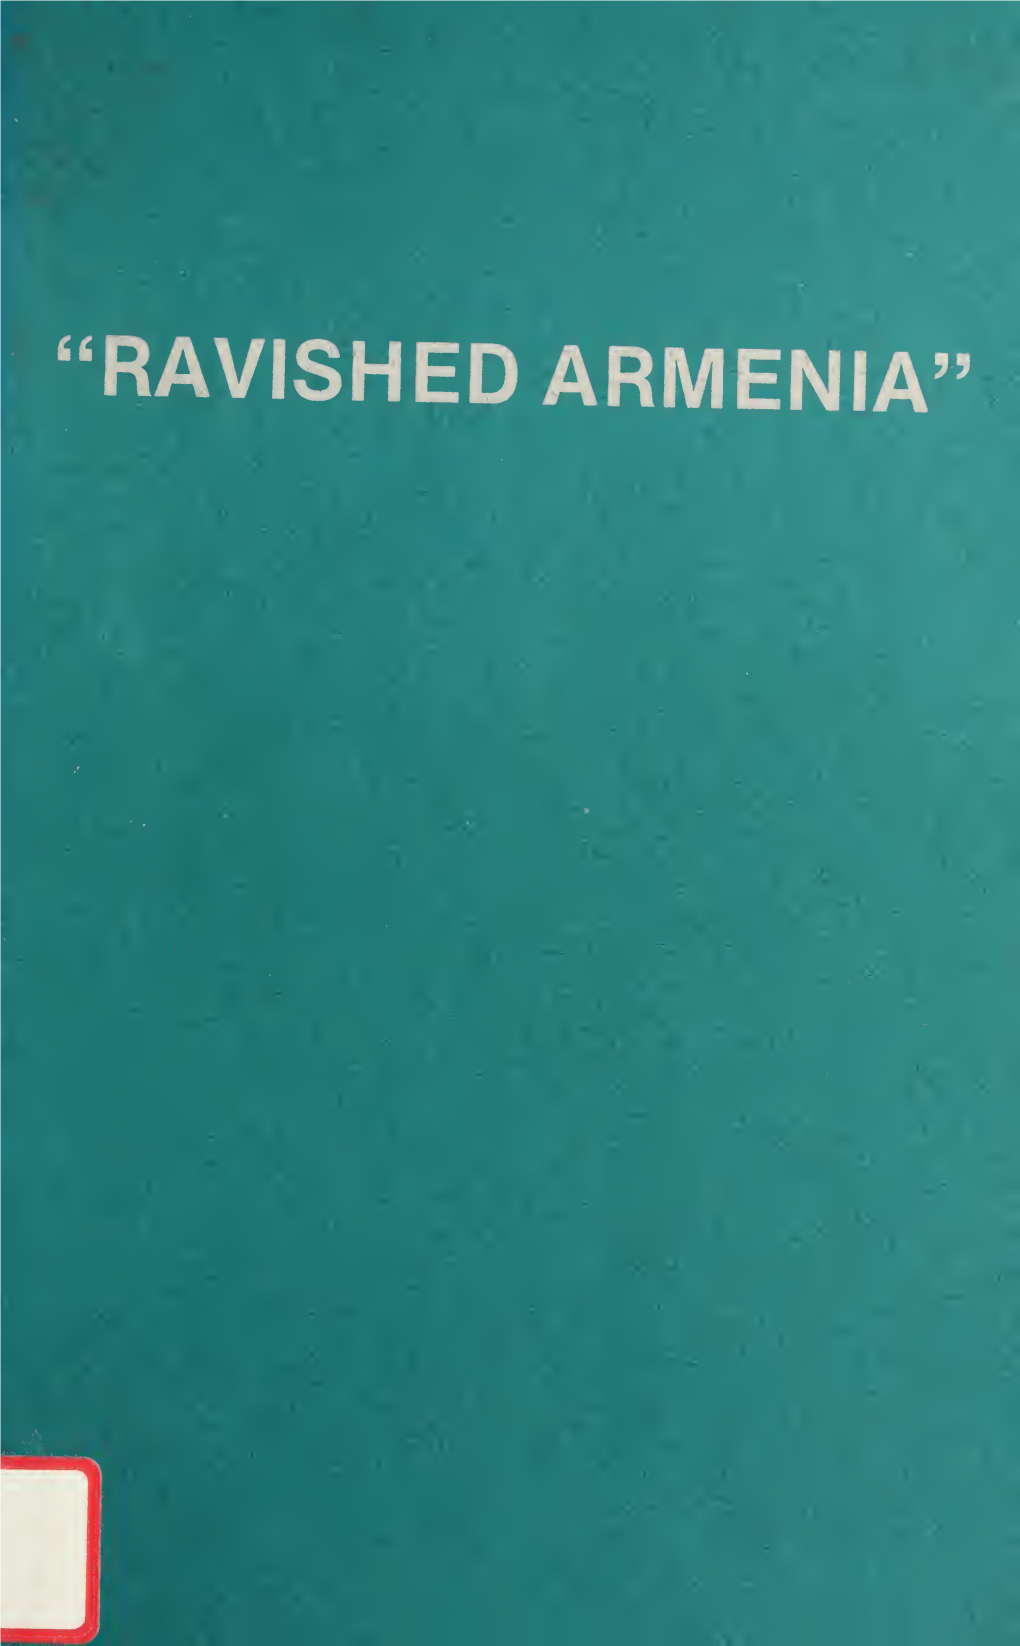 Ravished Armenia”